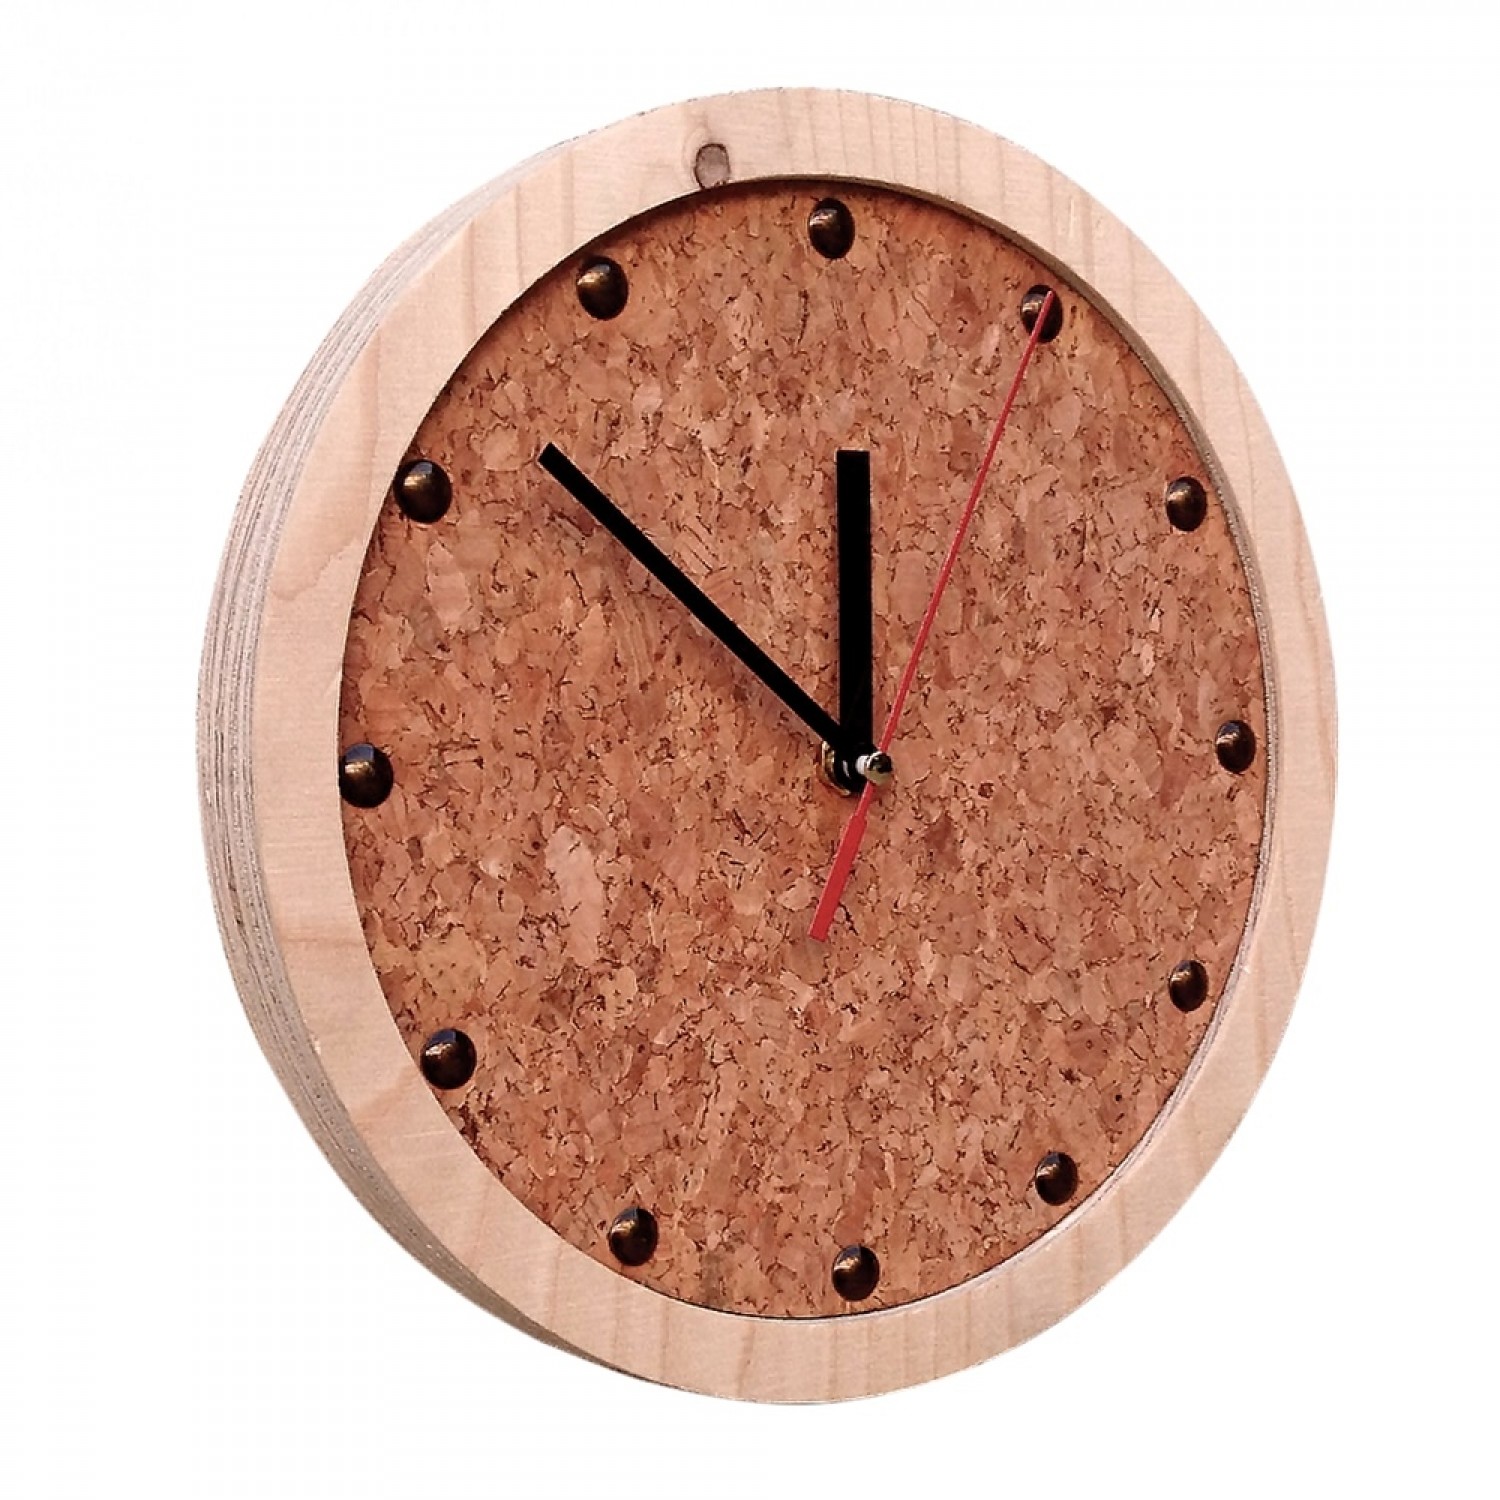 TOCK Wall Clock from natural materials | noThrow Design